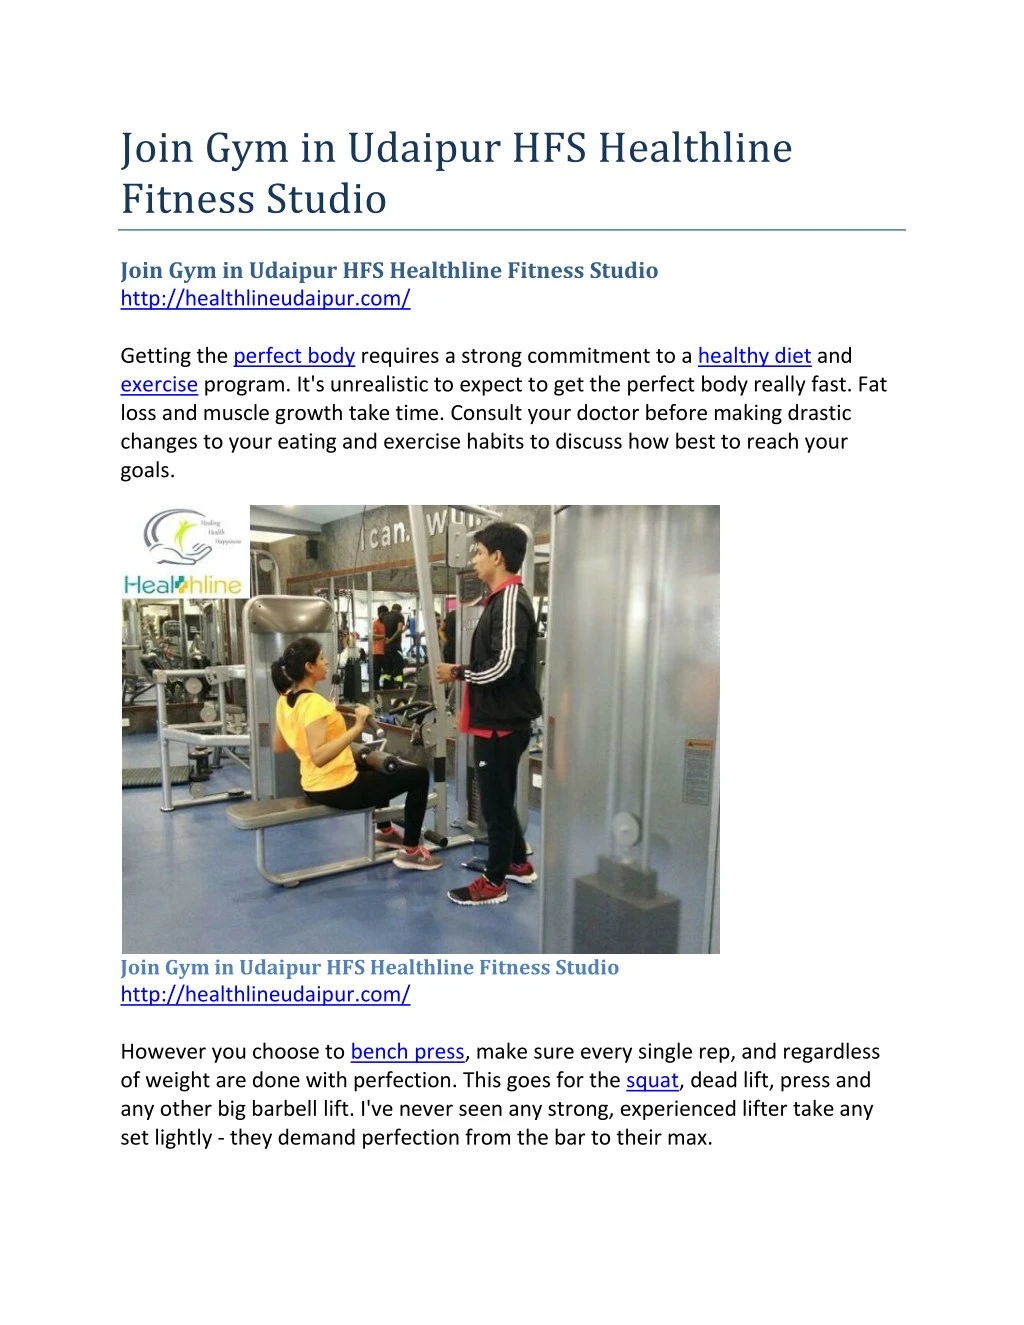 join gym in udaipur hfs healthline fitness studio